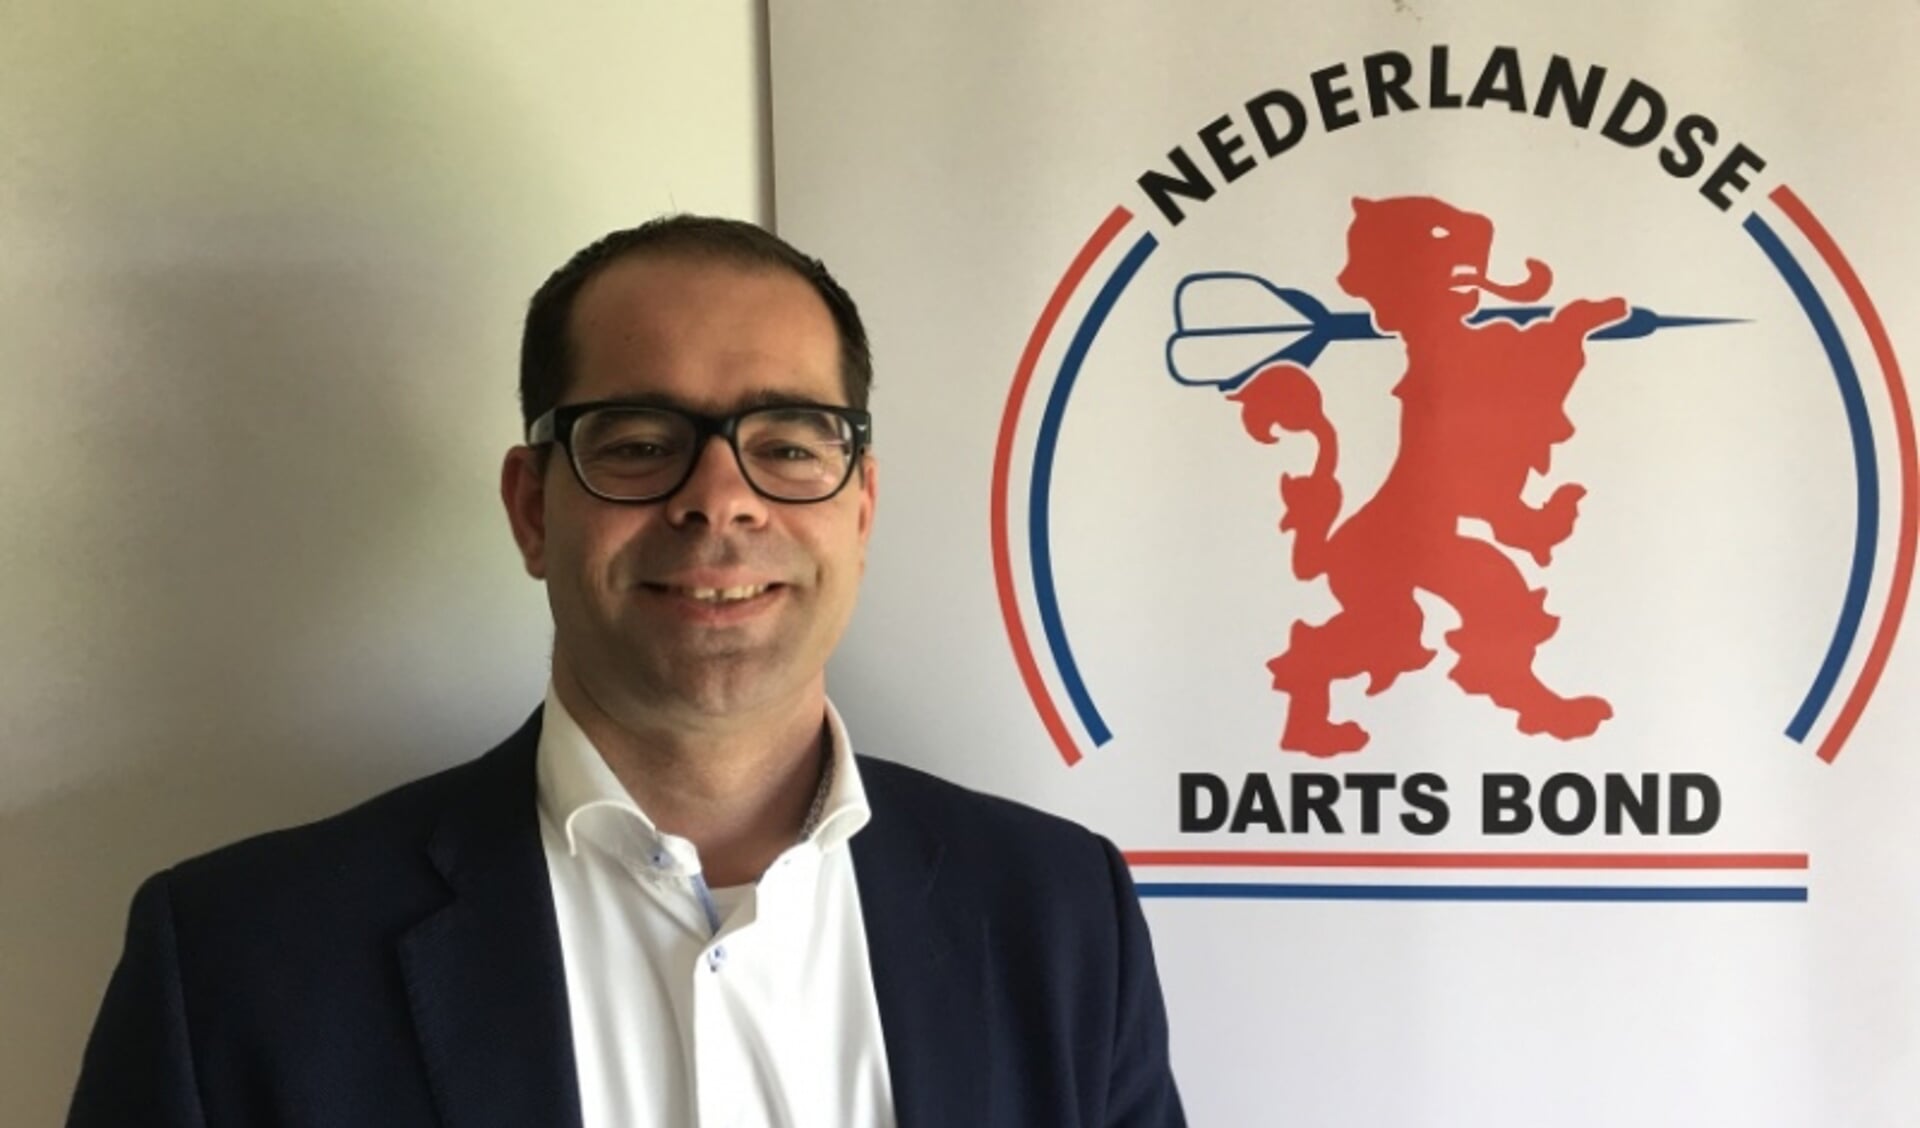 Fondse bestuurslid Topsport nationale dartbond